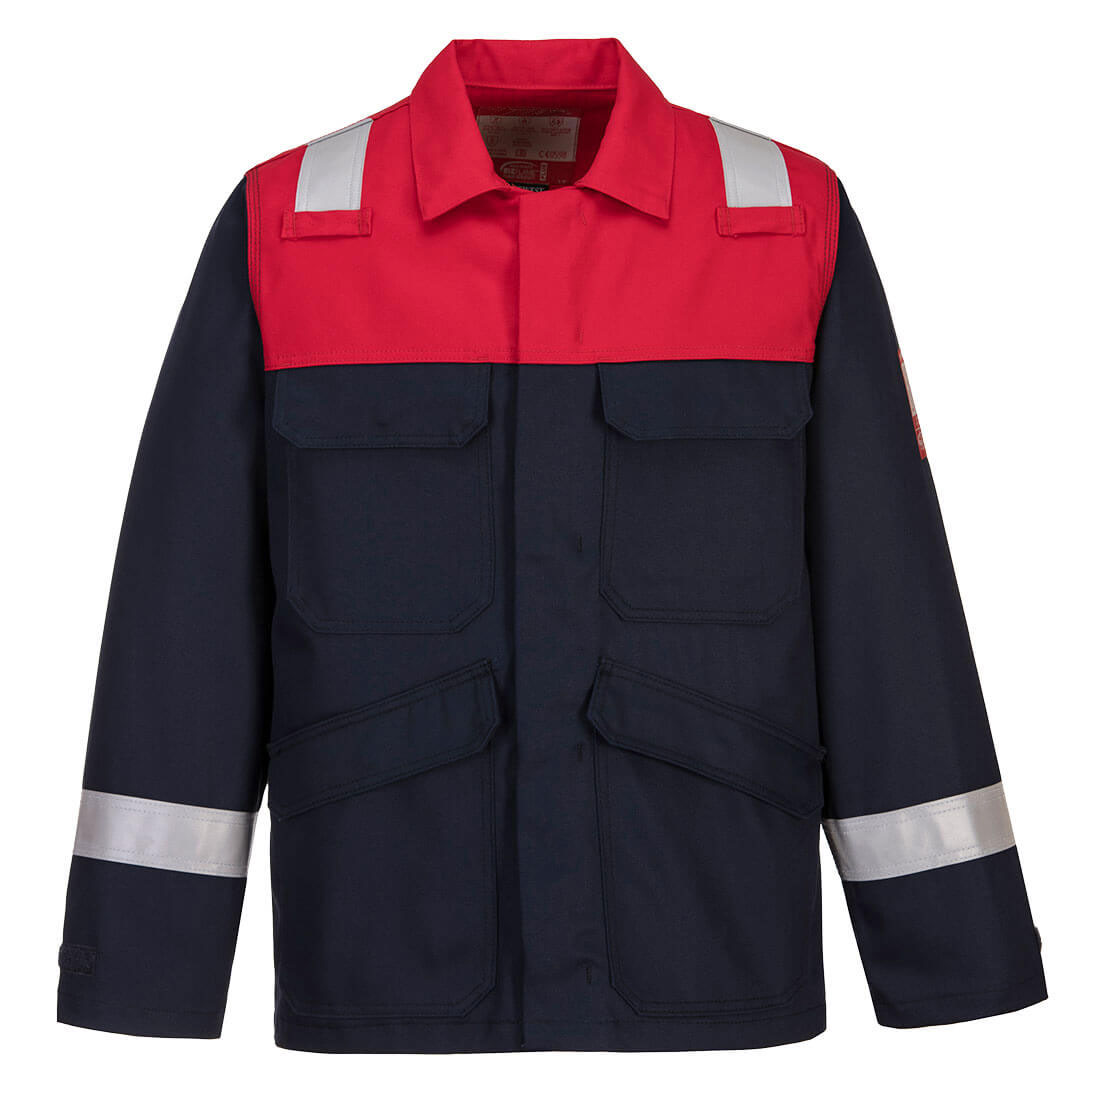 Flame Resistant Against Welding Hazards and Electric Arc Hi-Vis Jacket